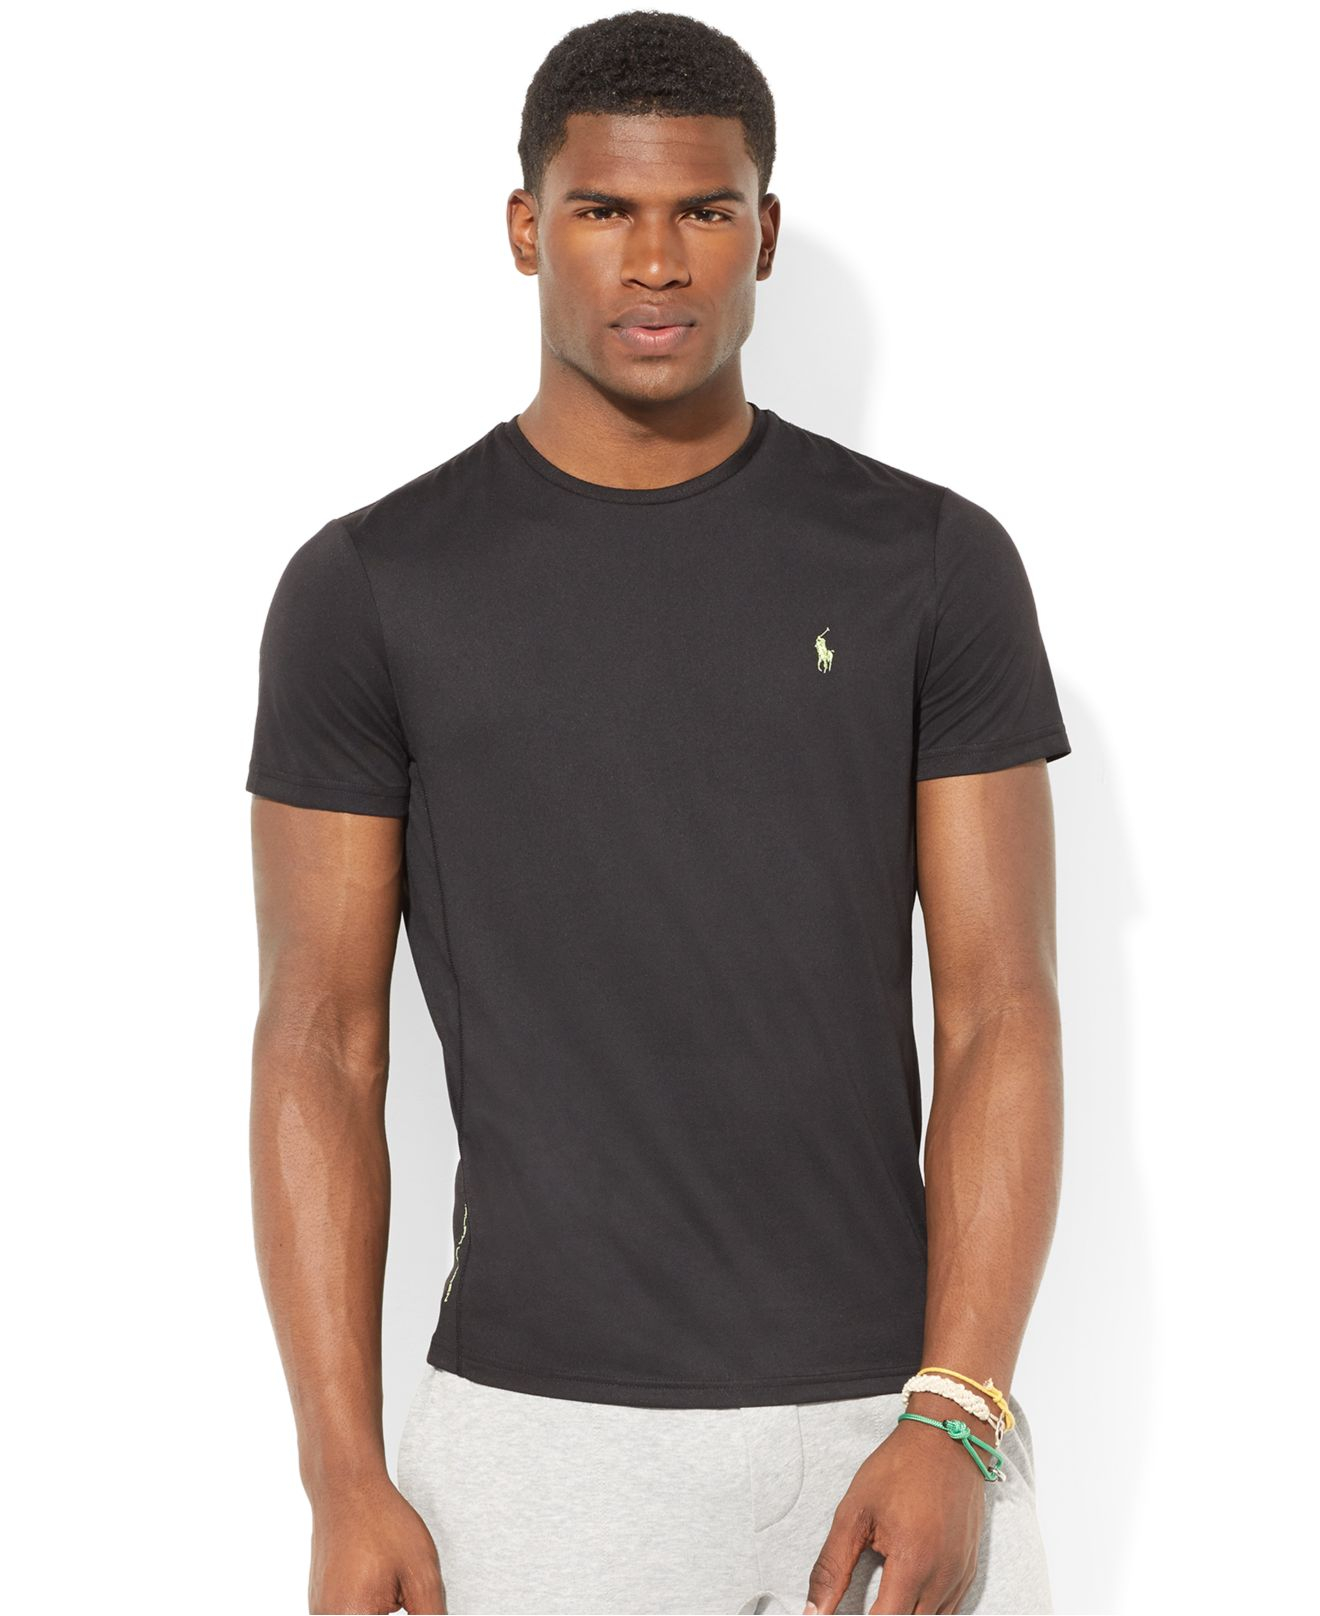 Polo Ralph Lauren Performance Jersey T-Shirt in Gray for Men - Lyst